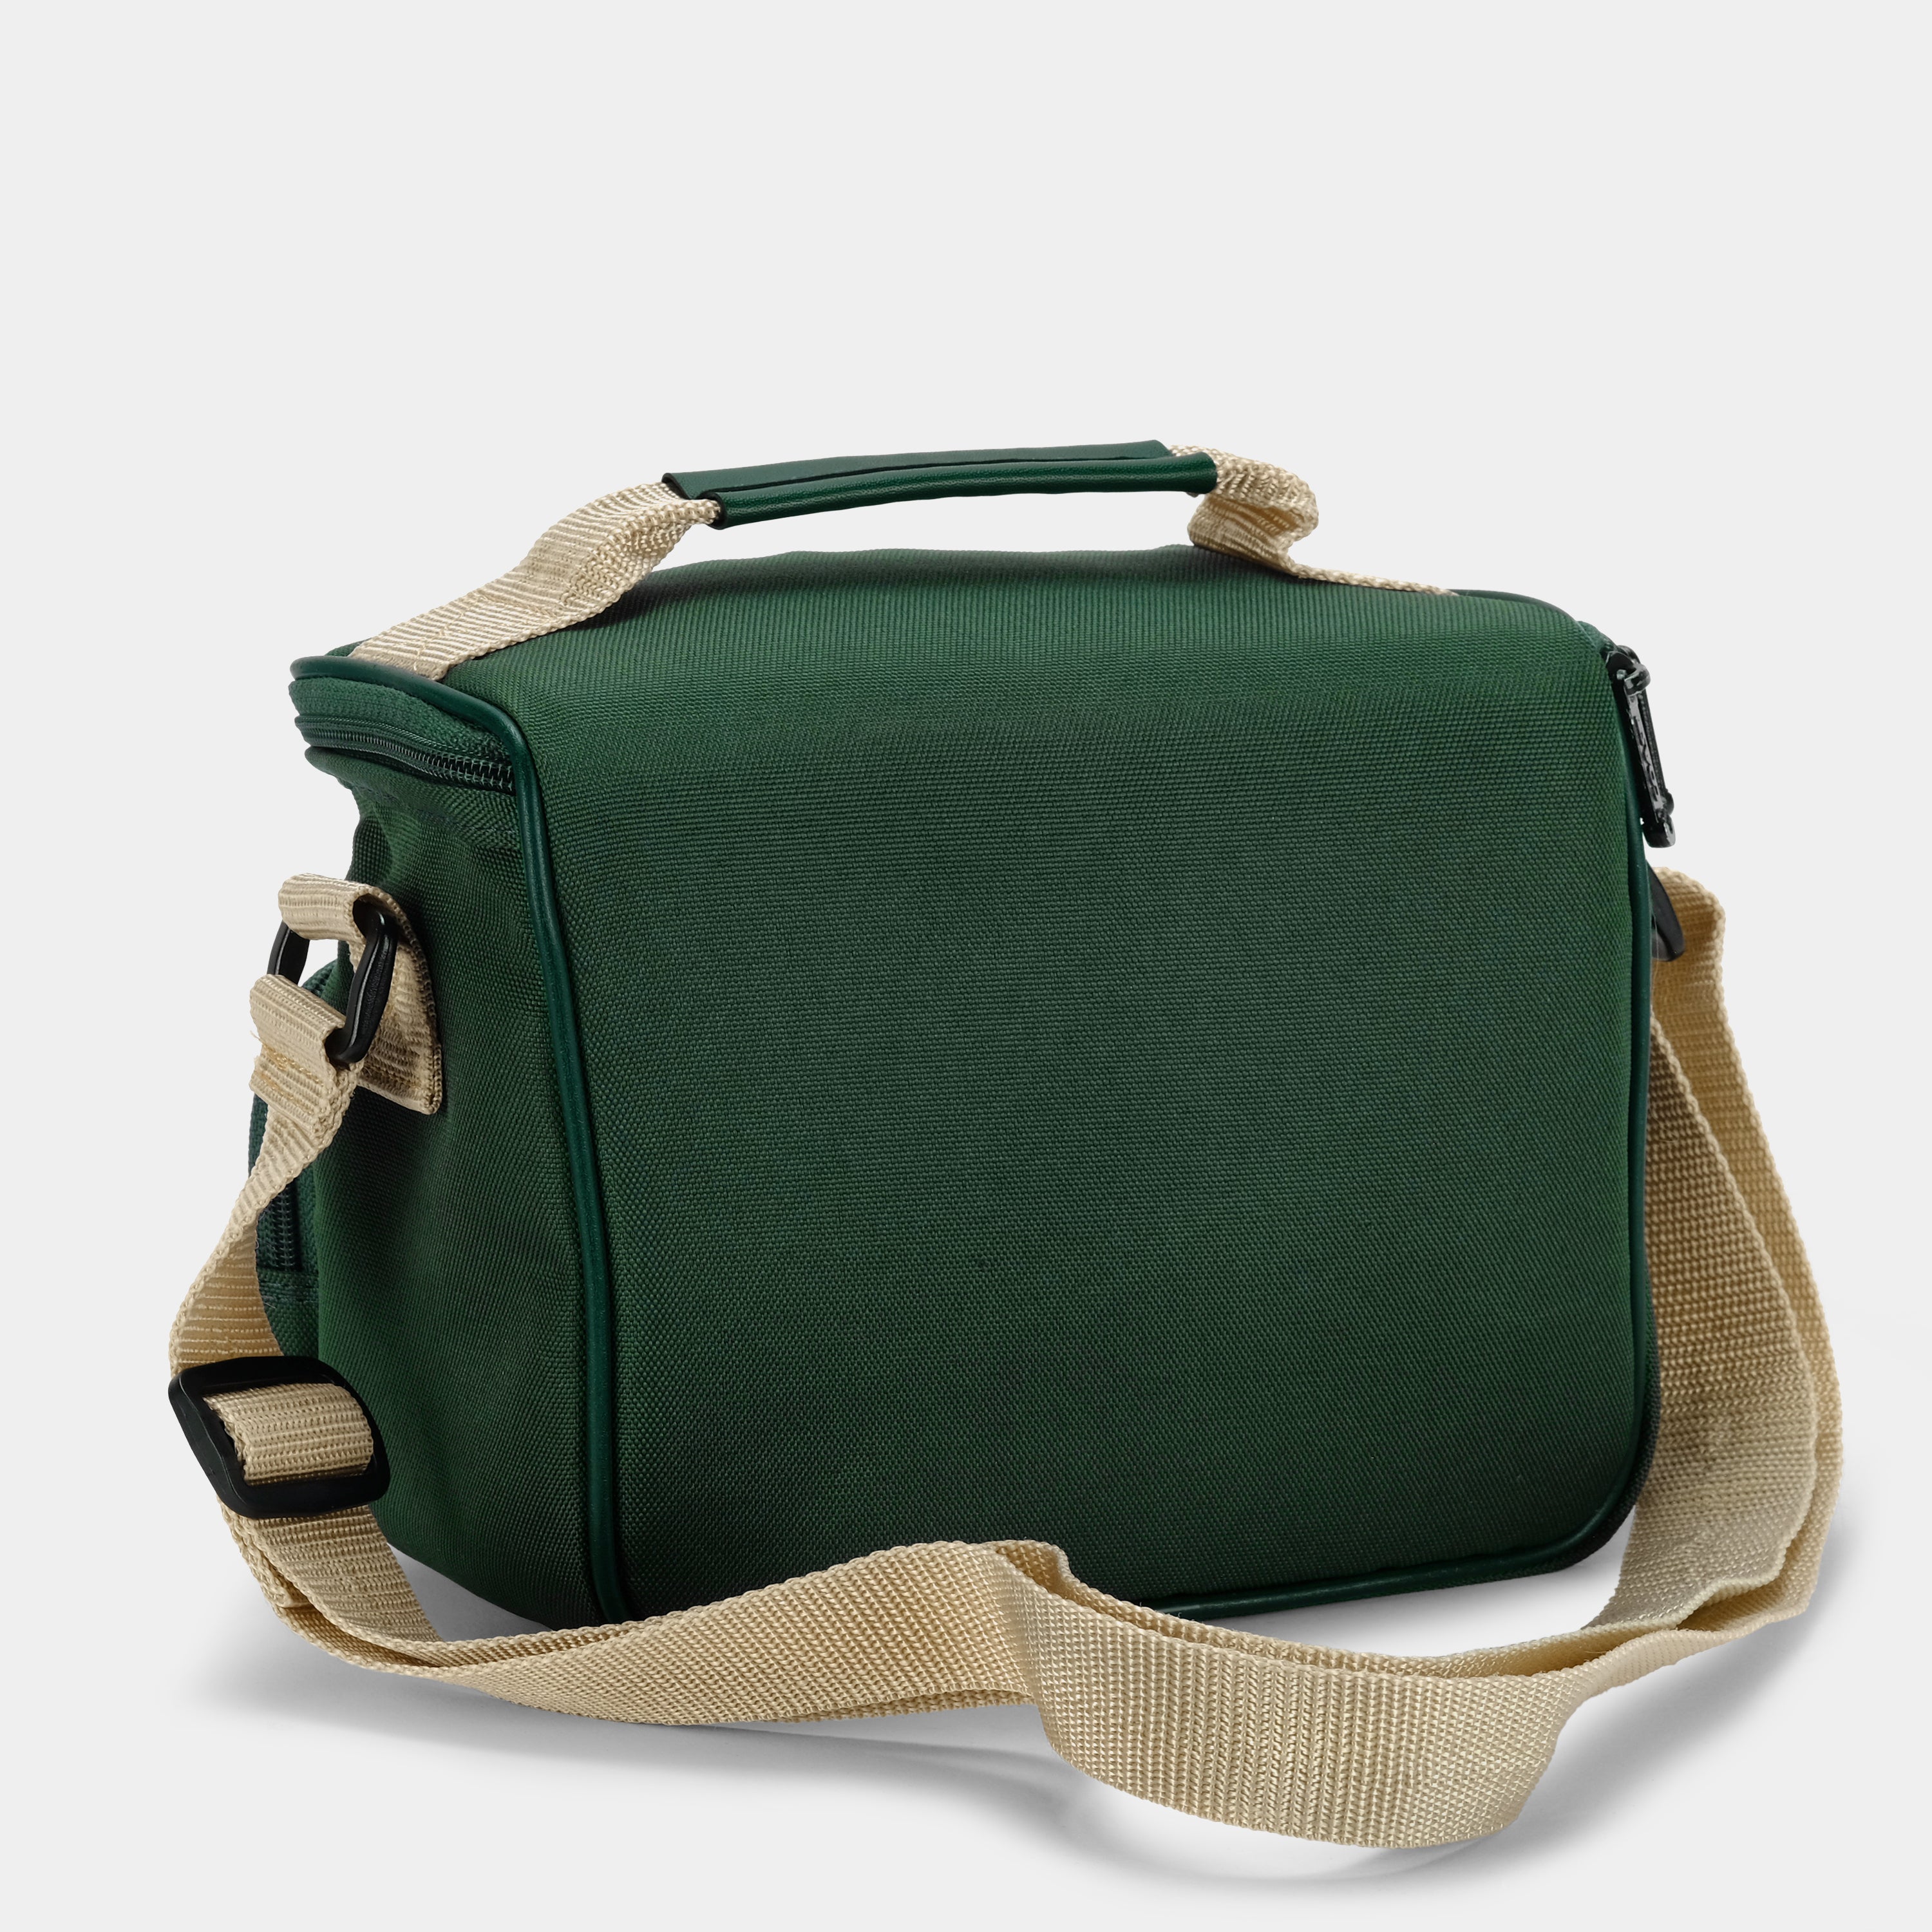 Green and Beige Camera Bag